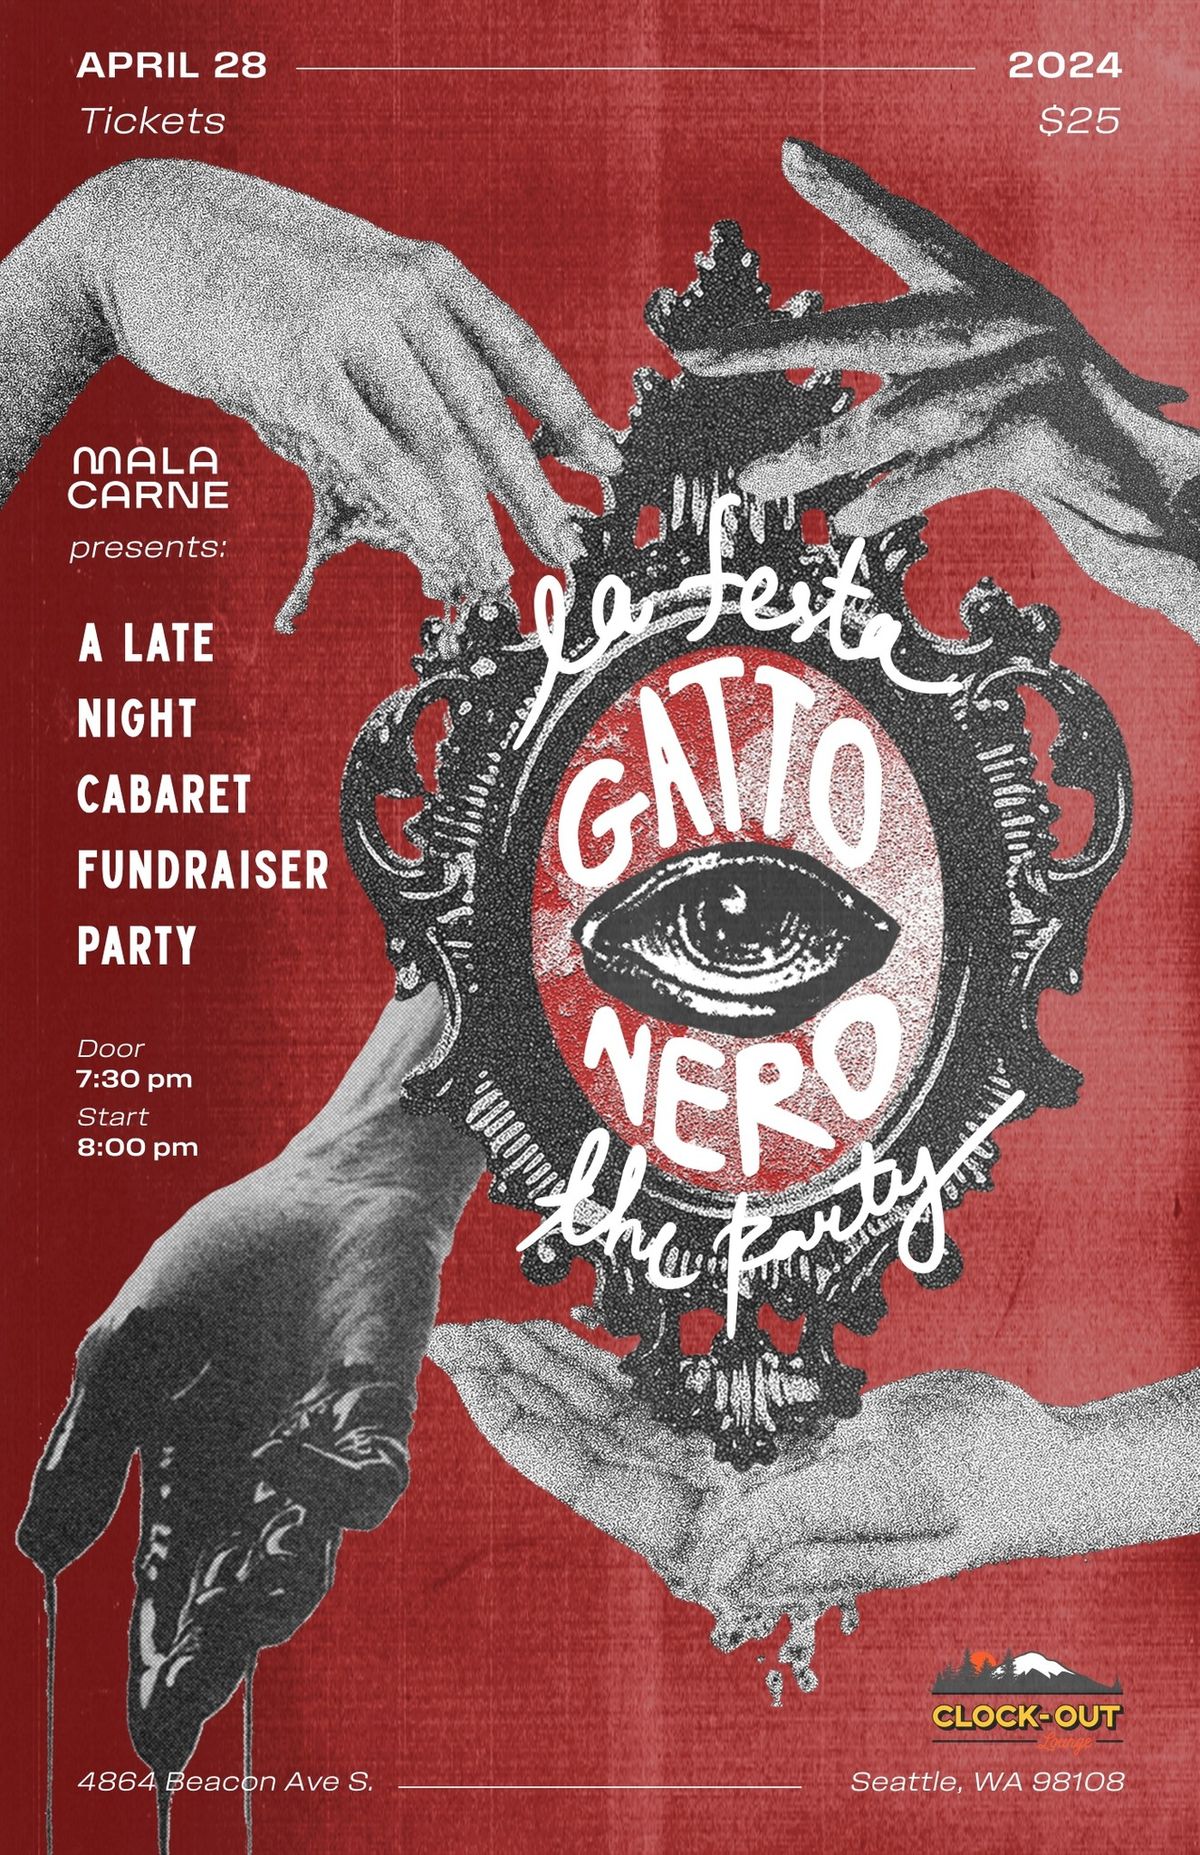 MALACARNE Presents: GATTO NERO-  A Late Night Cabaret Fundraiser Party